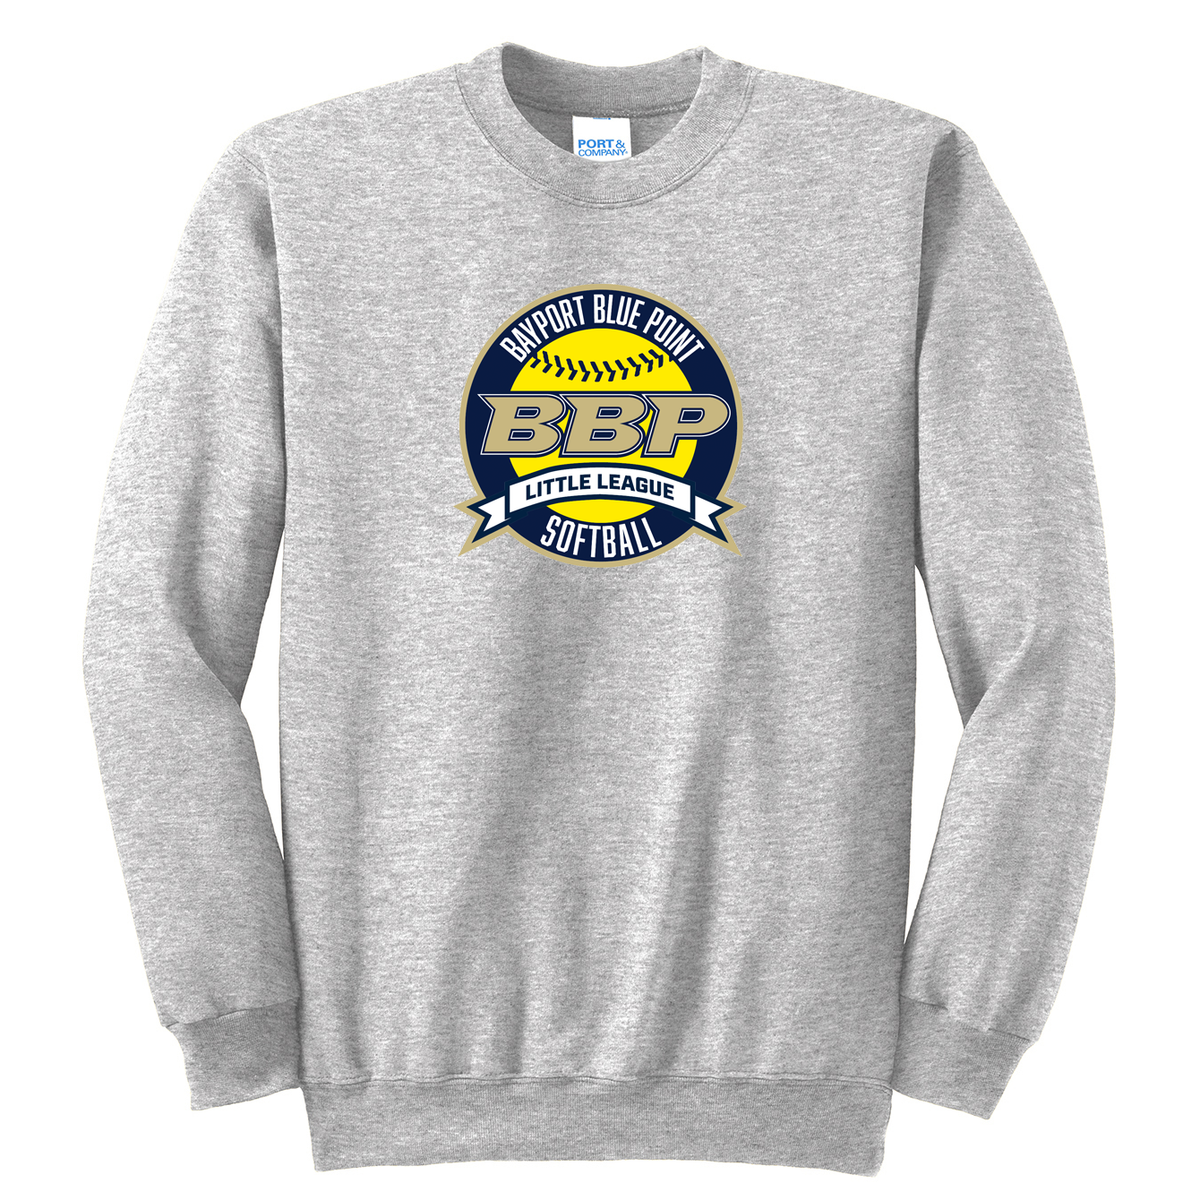 BBP Little League Crew Neck Sweater